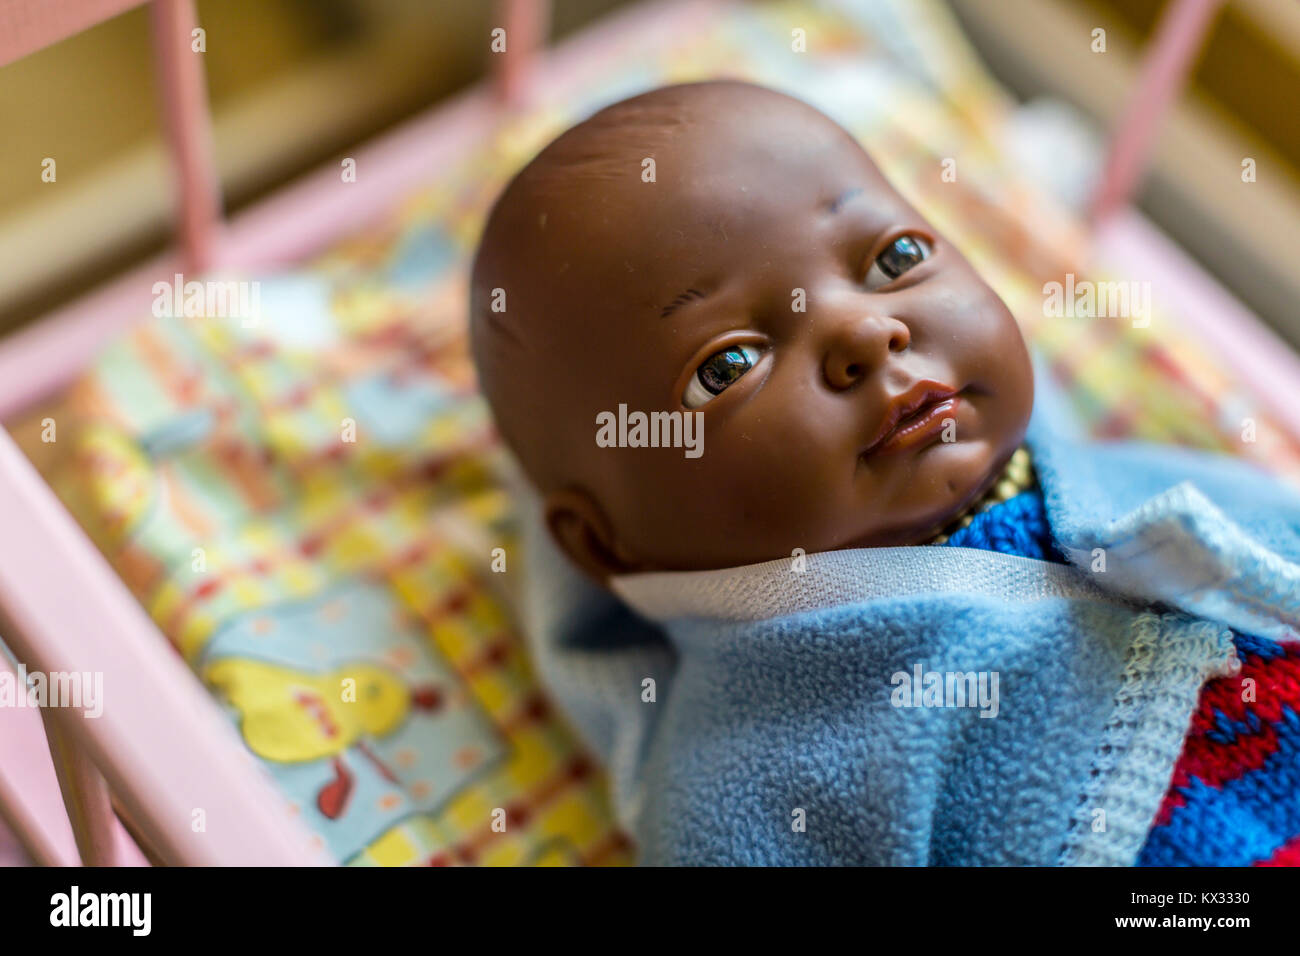 Dark skin baby doll dressed in blue Stock Photo